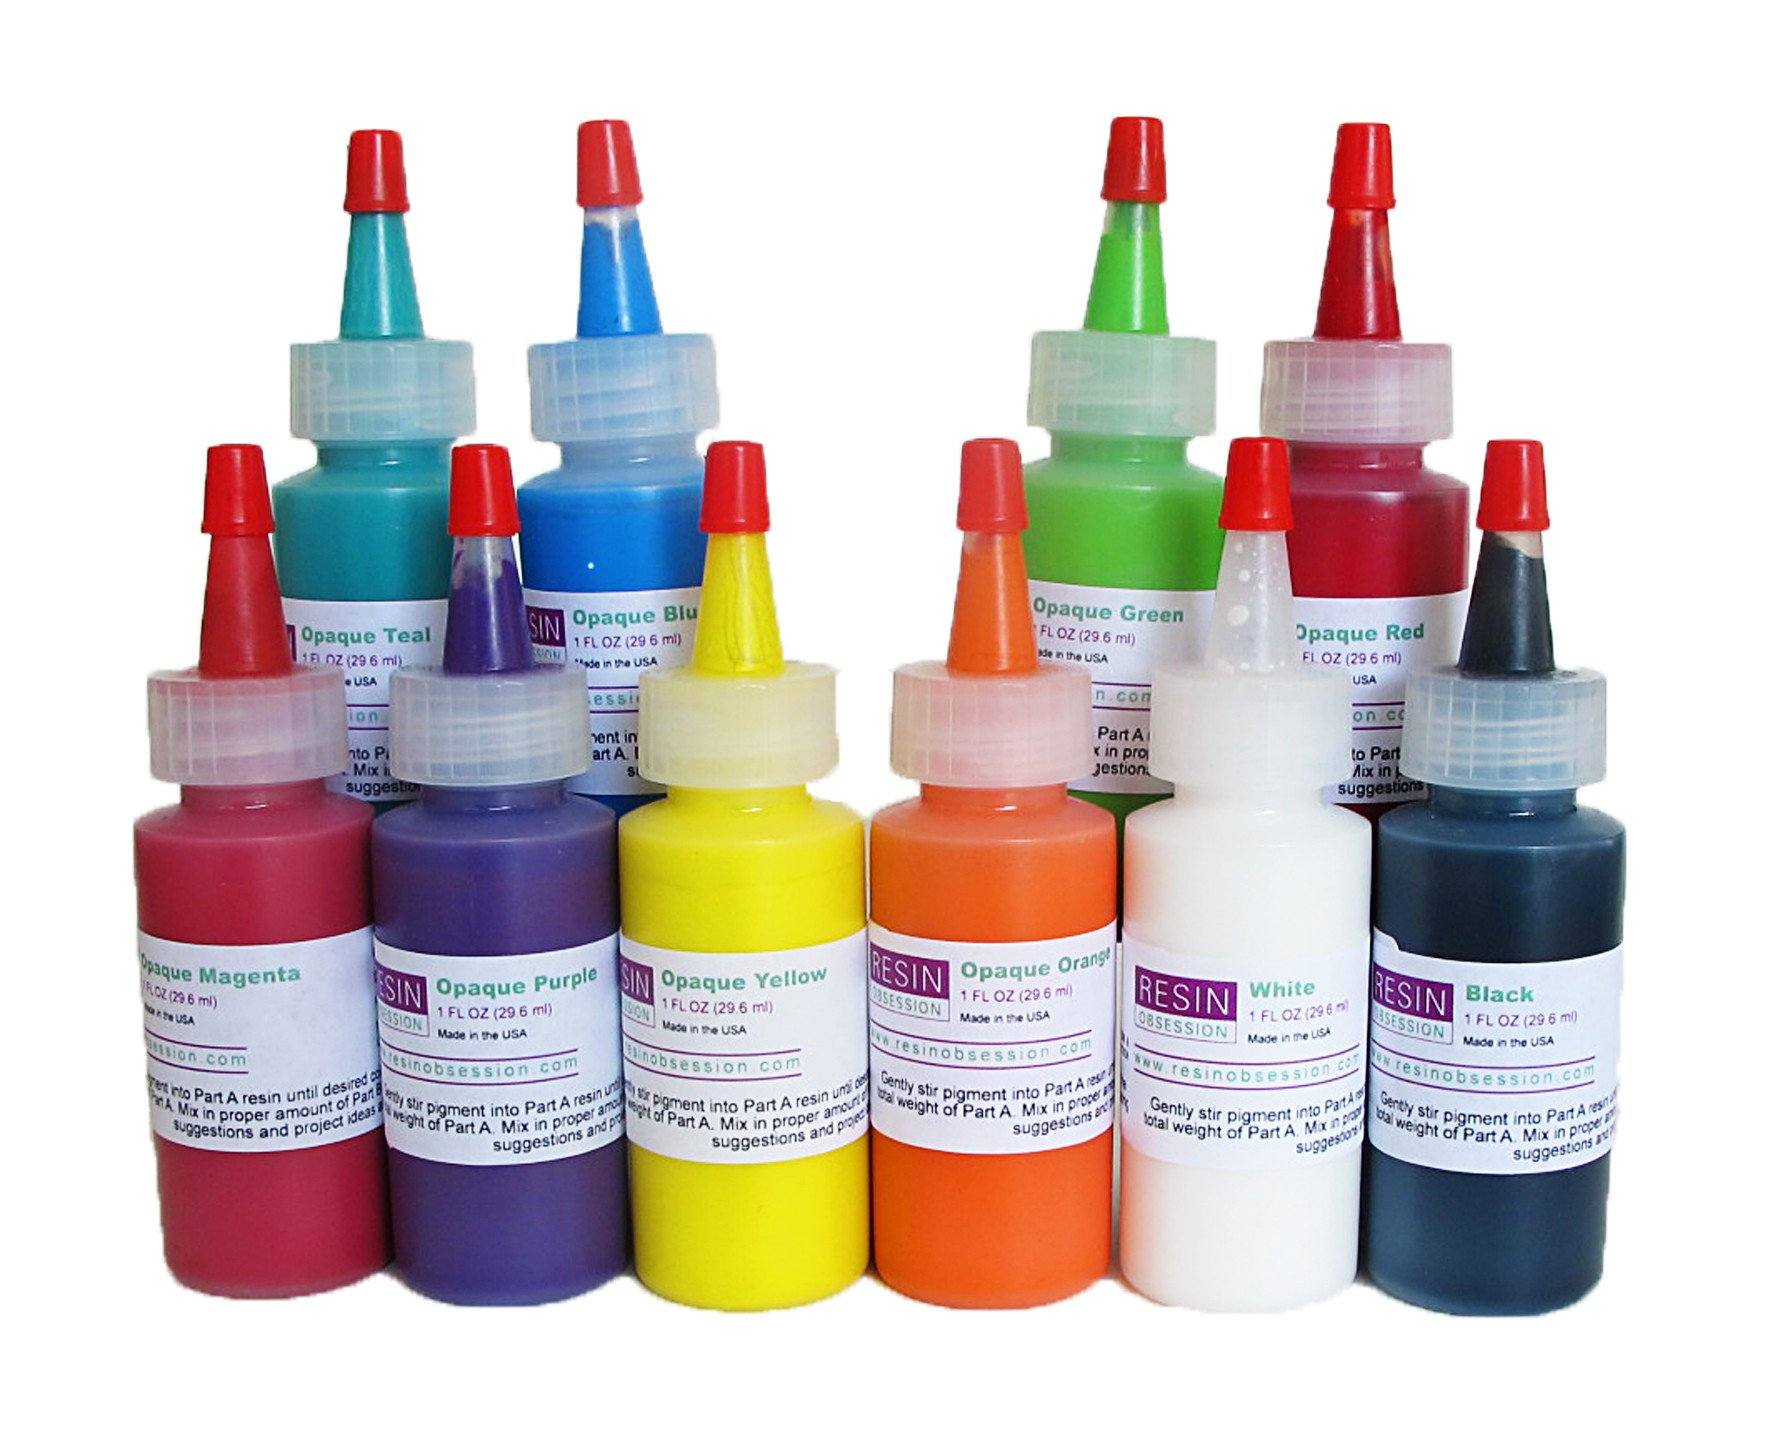 Mr.Resin™ Opaque Macaron Pigment Set- 24 Colors for Epoxy & UV